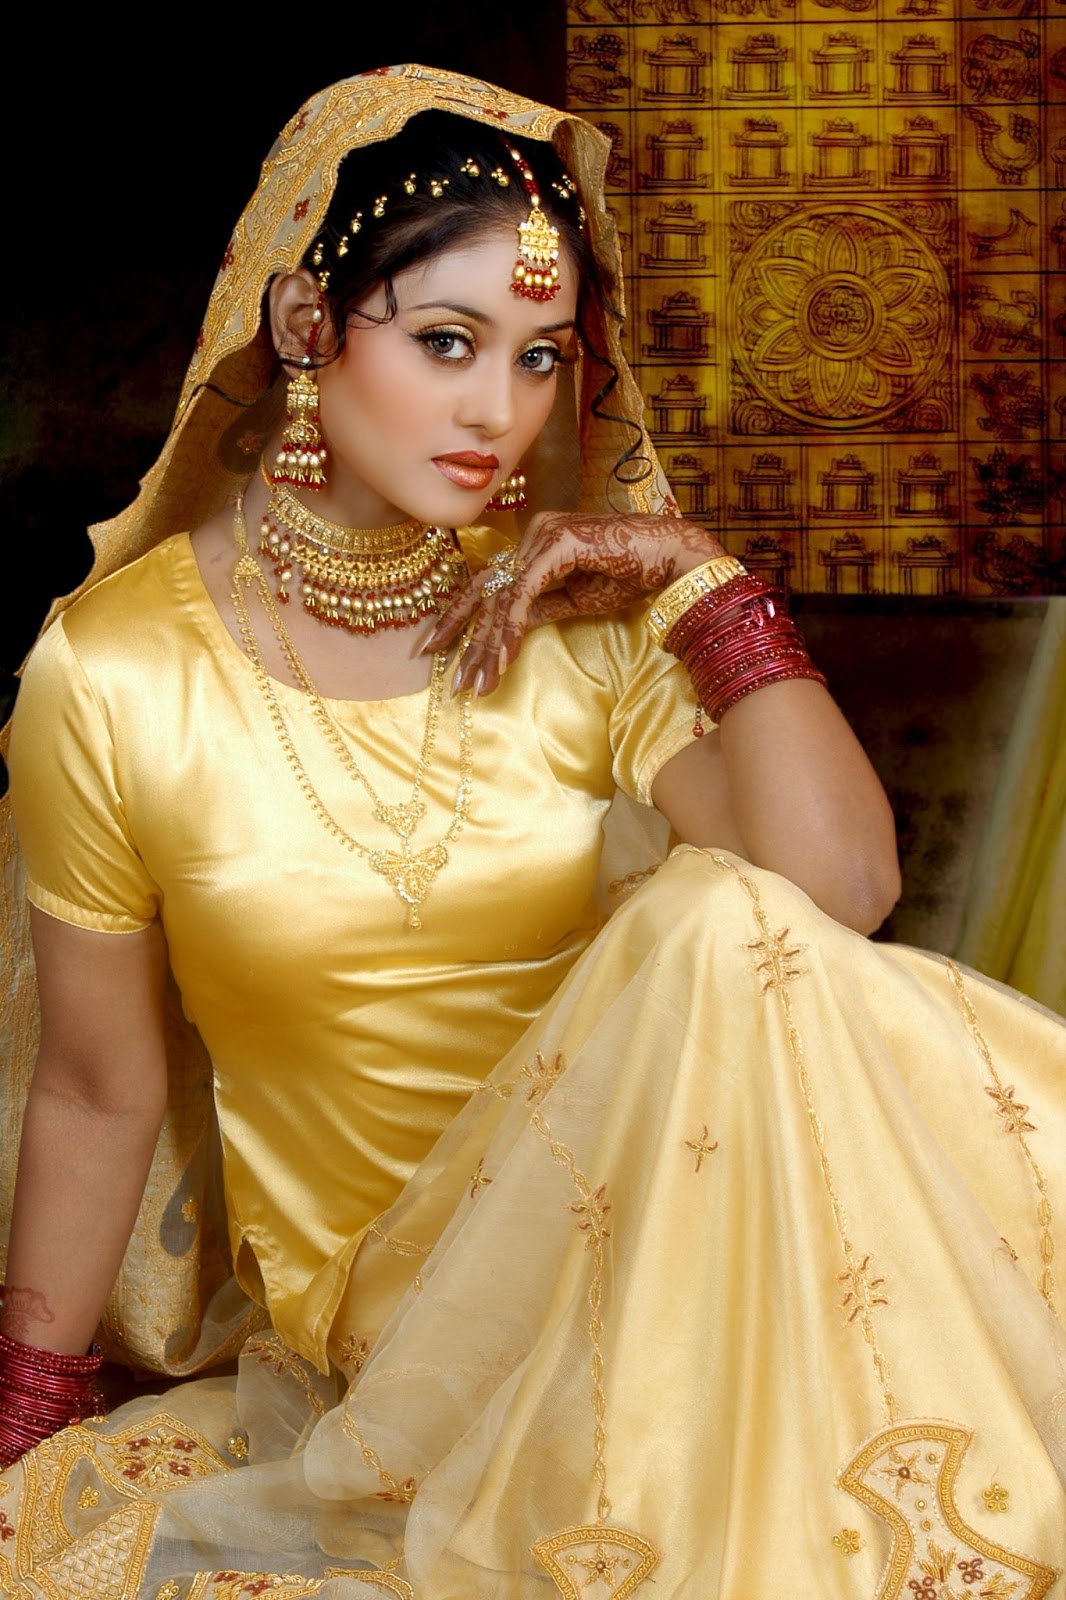 dulhan wallpaper,clothing,yellow,bride,headpiece,dress